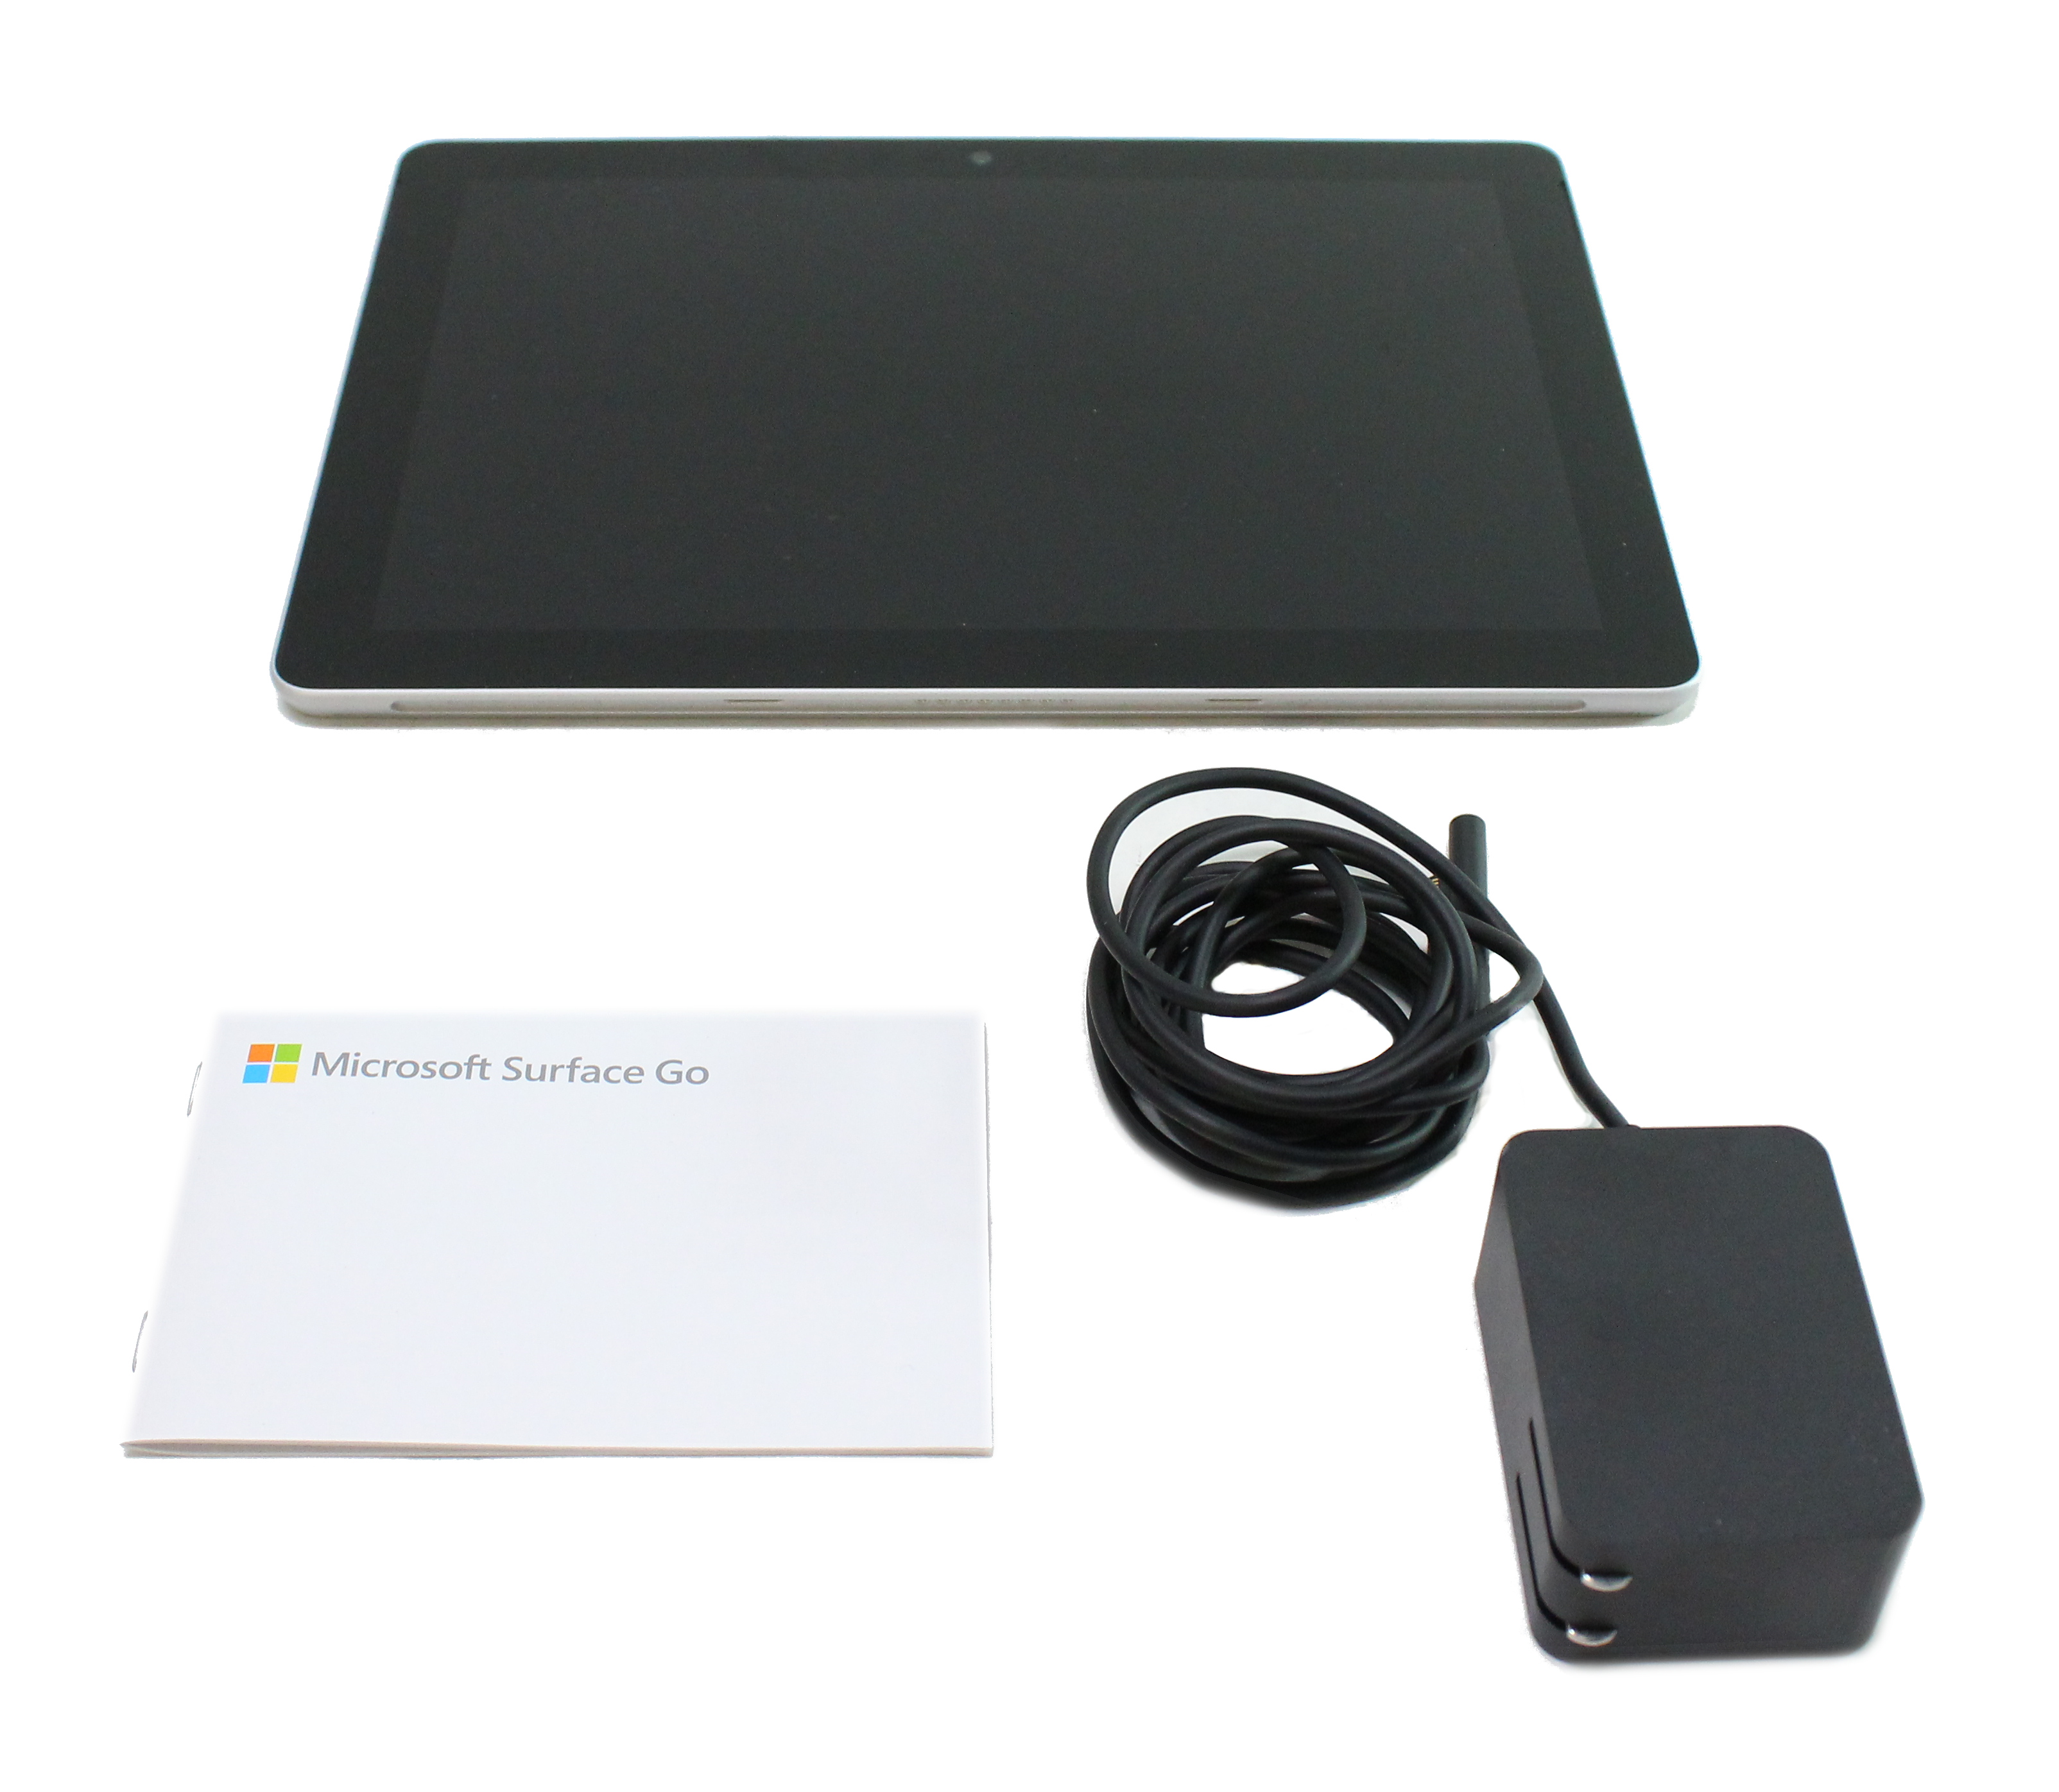 Microsoft Surface Go: 10-inch Pentium-powered Windows tablet